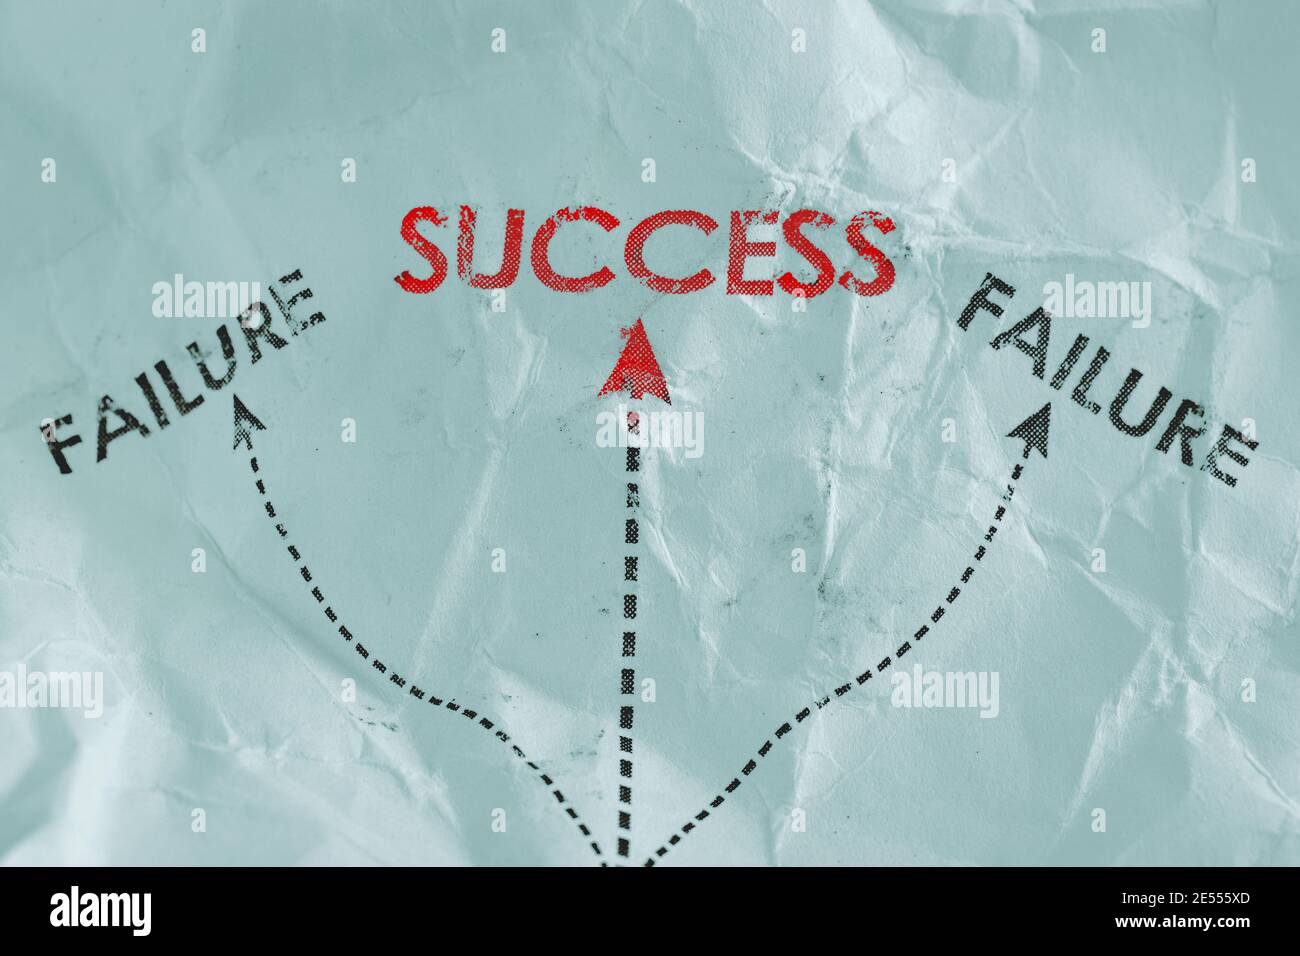 Motivational Wallpaper on Success: Success means we go to sleep-mncb.edu.vn